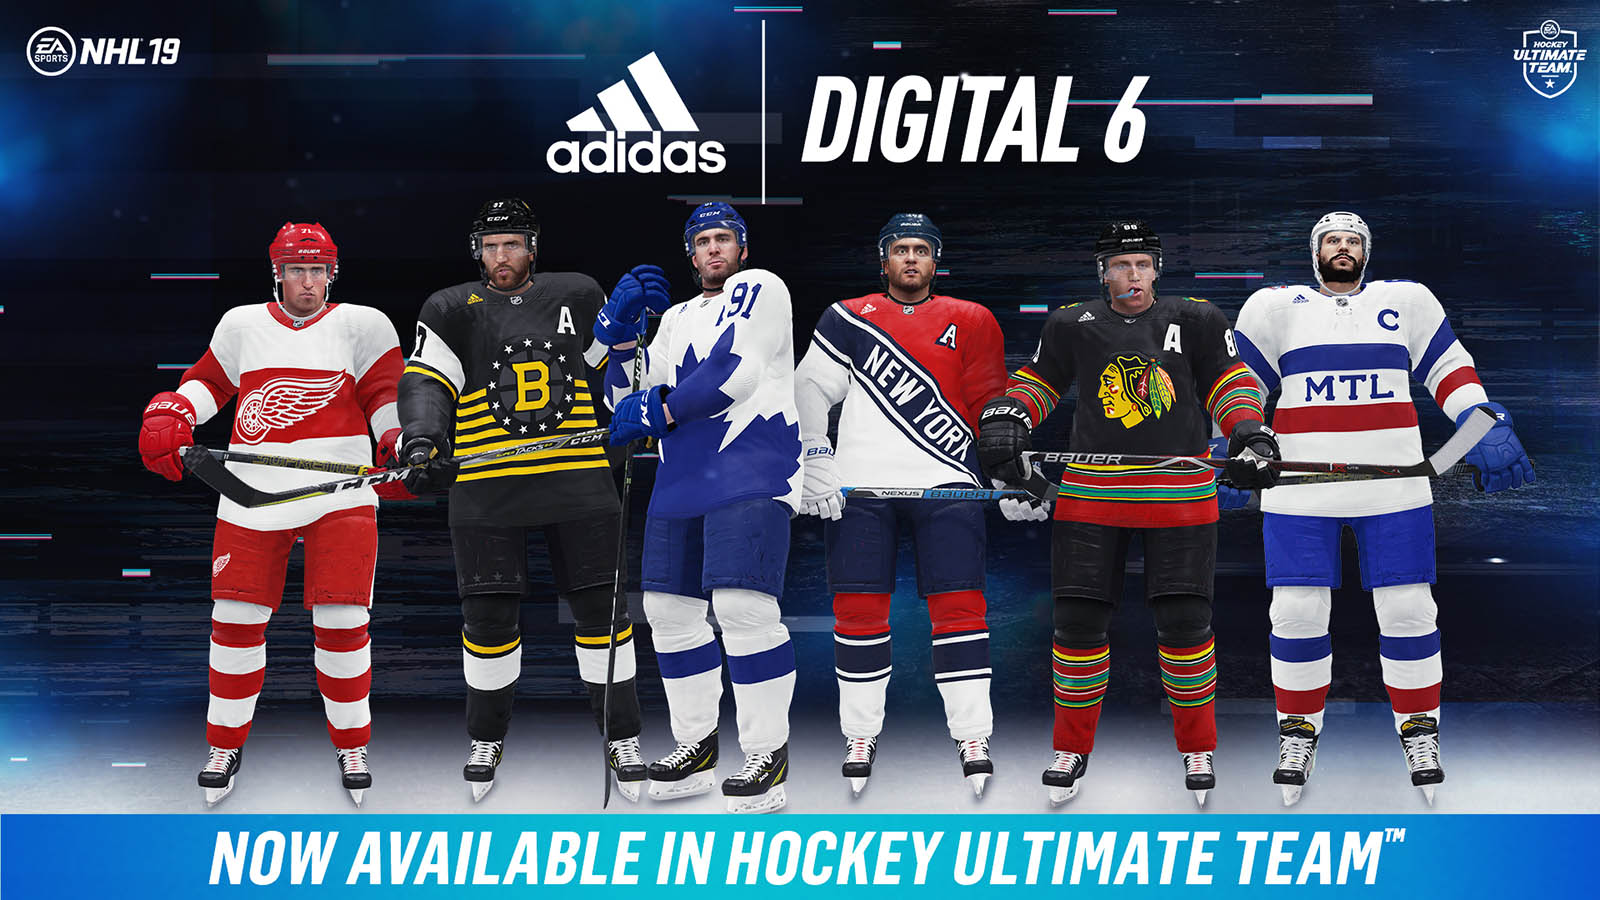 New Season Adidas Hockey Equipment in the Spotlight